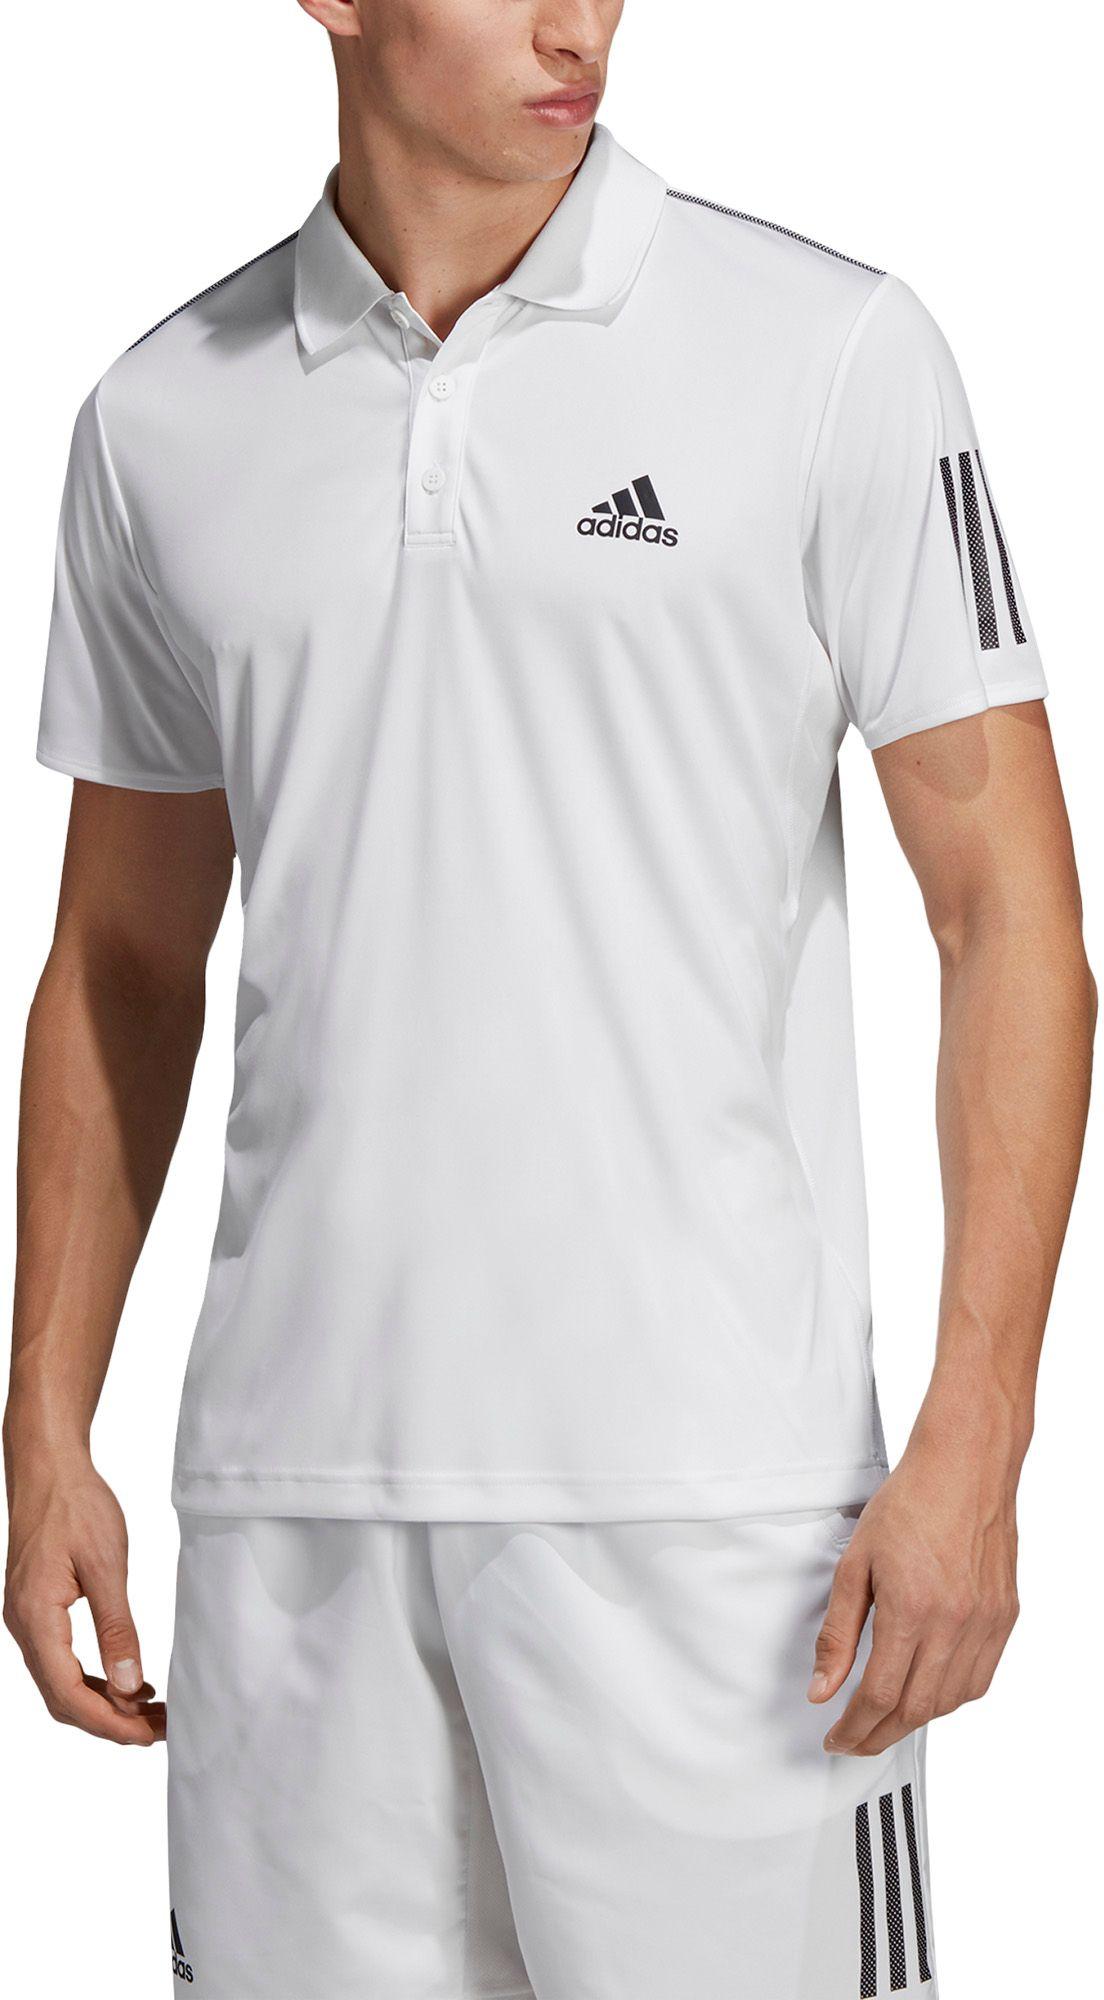 adidas Club 3 Stripes Tennis Polo in White for Men - Lyst